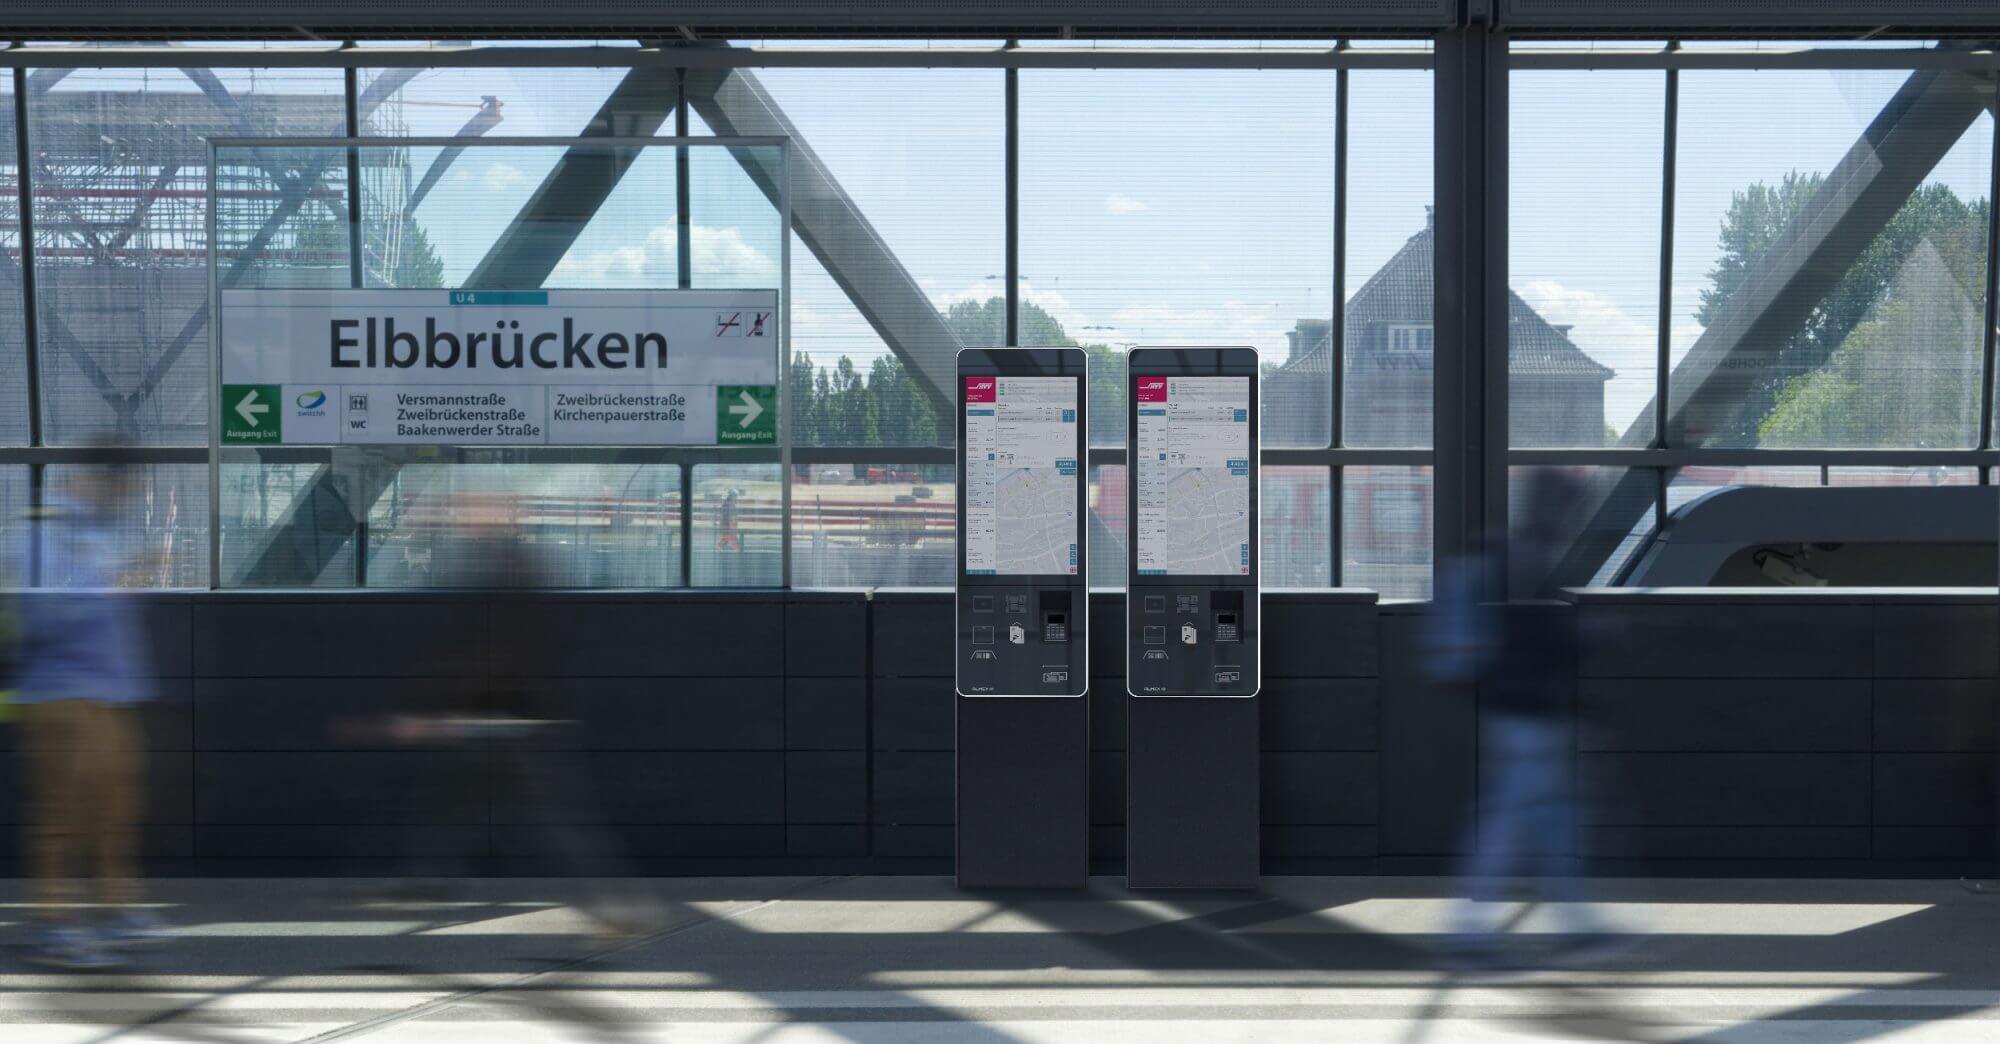 Hochbahn Hamburg Ticketautomat Szene3 %UX/UI %Innovation scenario use case